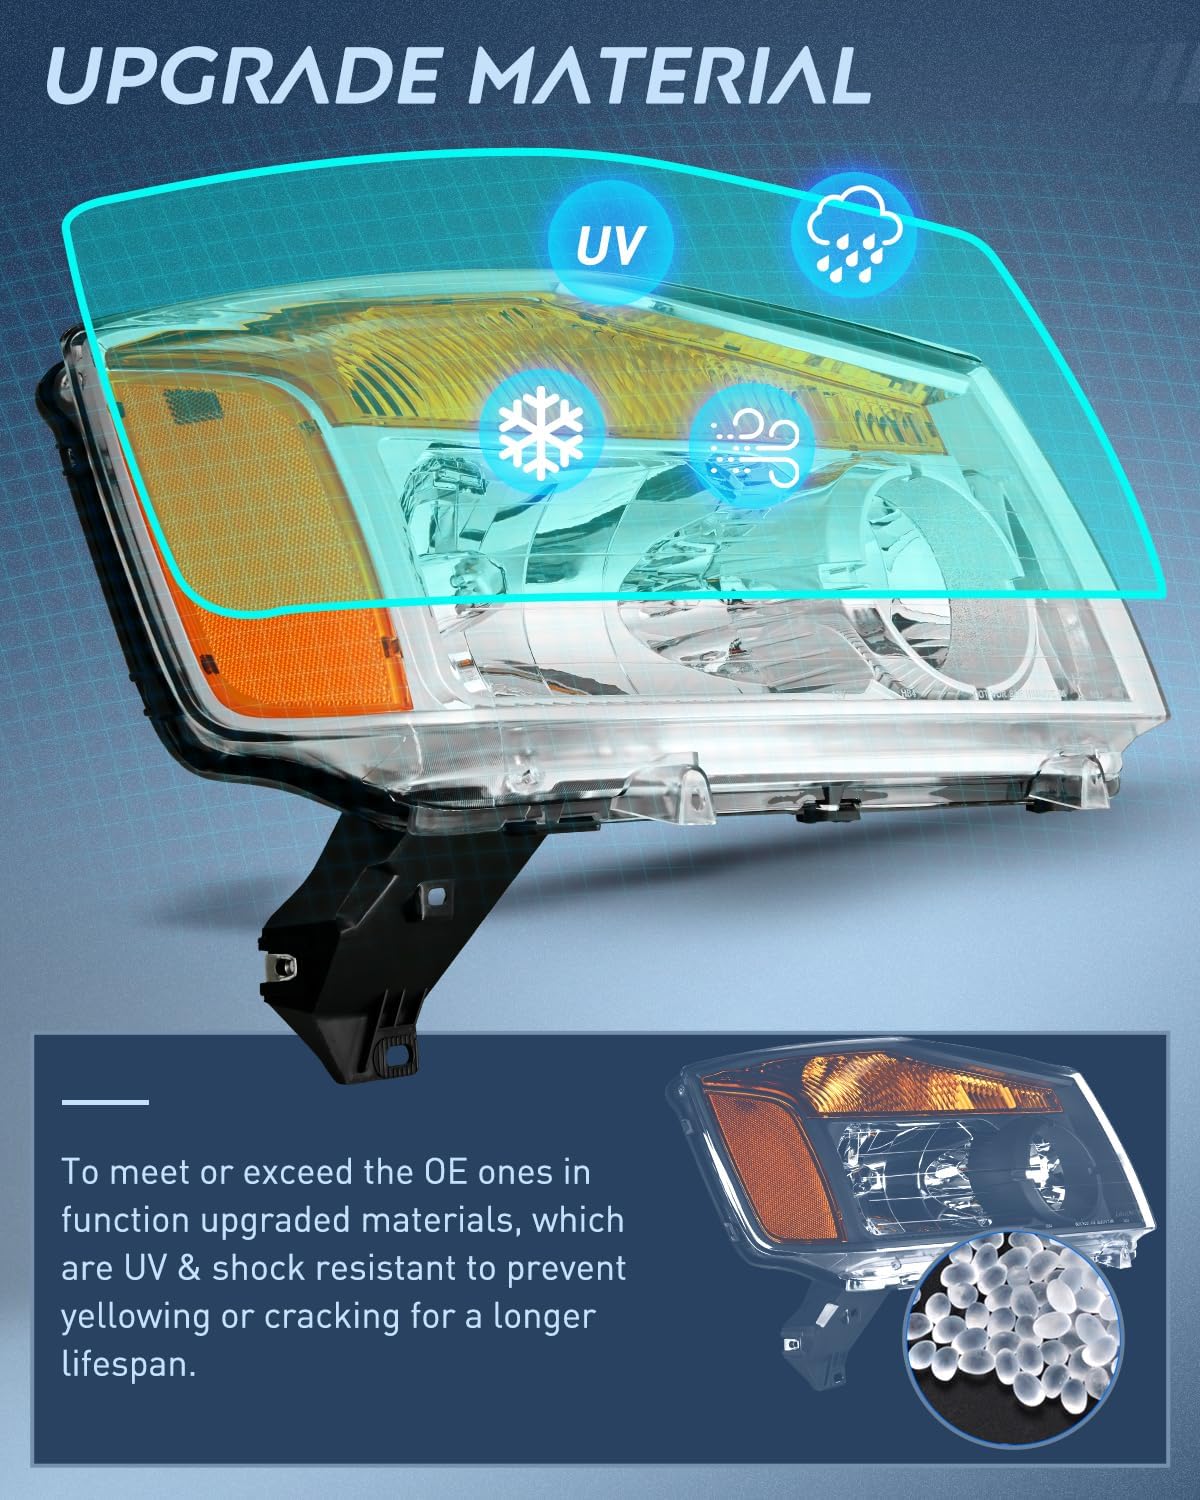 2004-2015 Titan 2005-2007 Armada 2004 Pathfinder Armada Headlight Assembly Chrome Case Amber Reflector Nilight